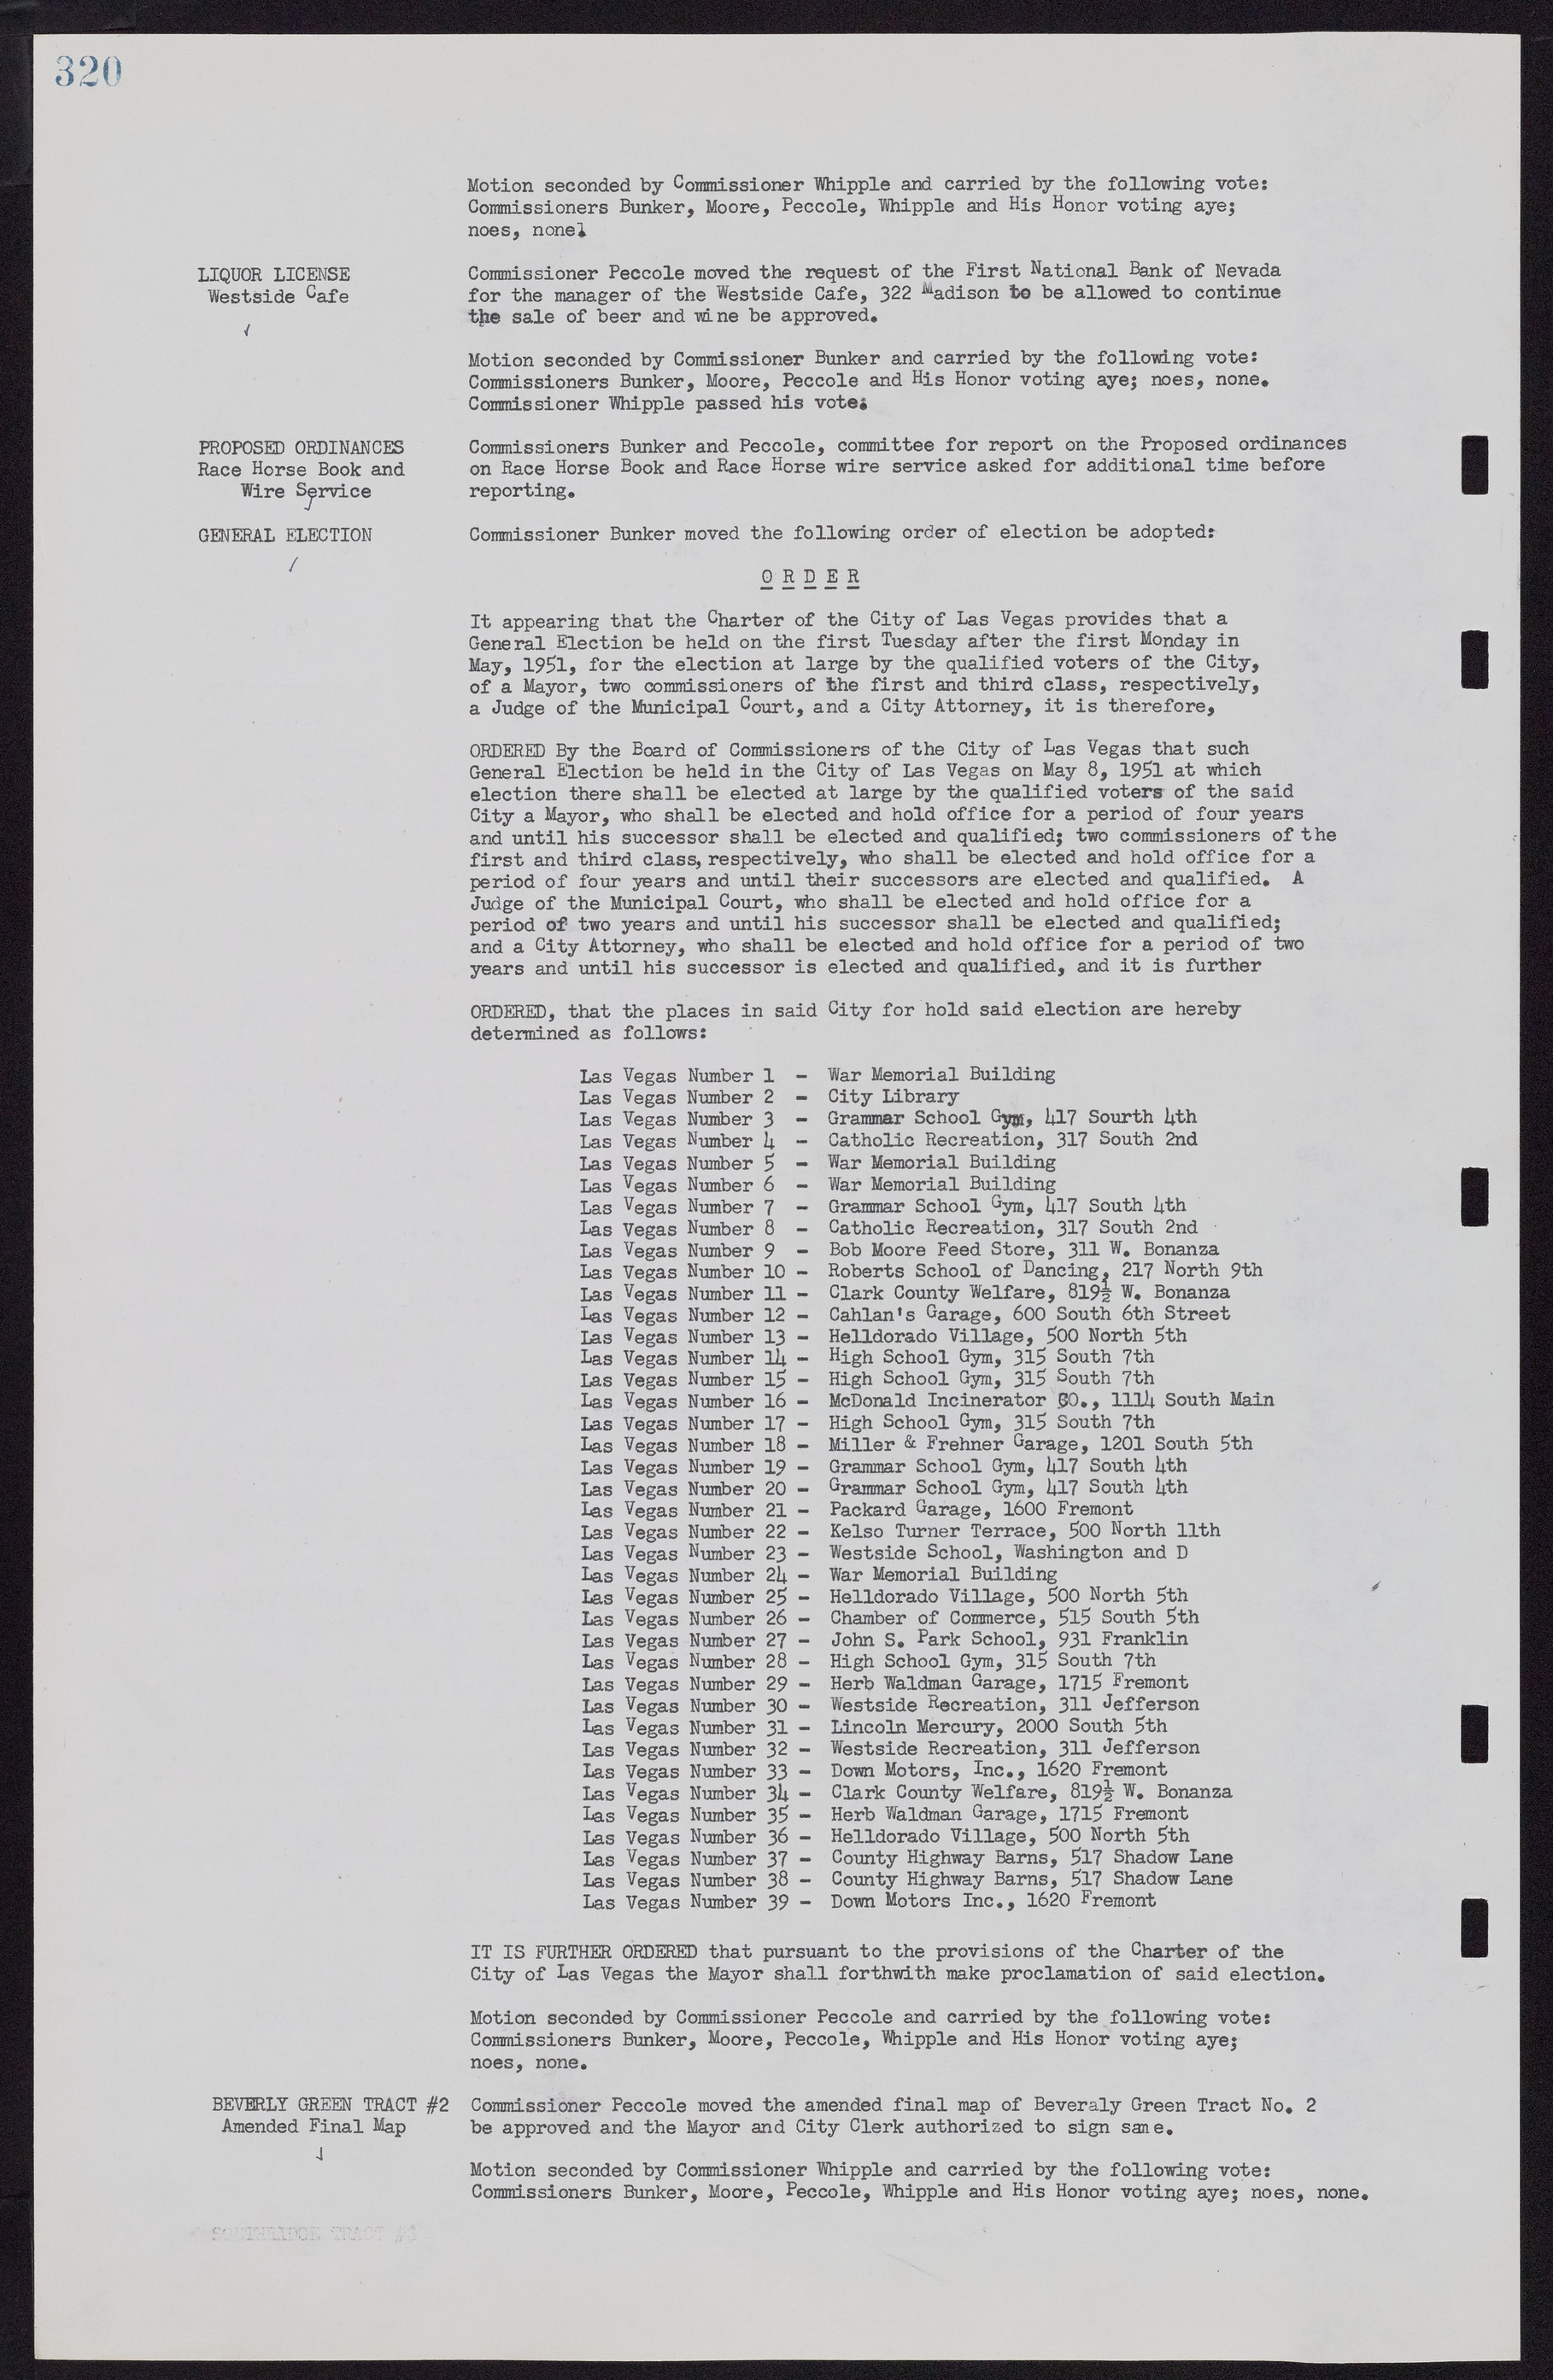 Las Vegas City Commission Minutes, November 7, 1949 to May 21, 1952, lvc000007-332